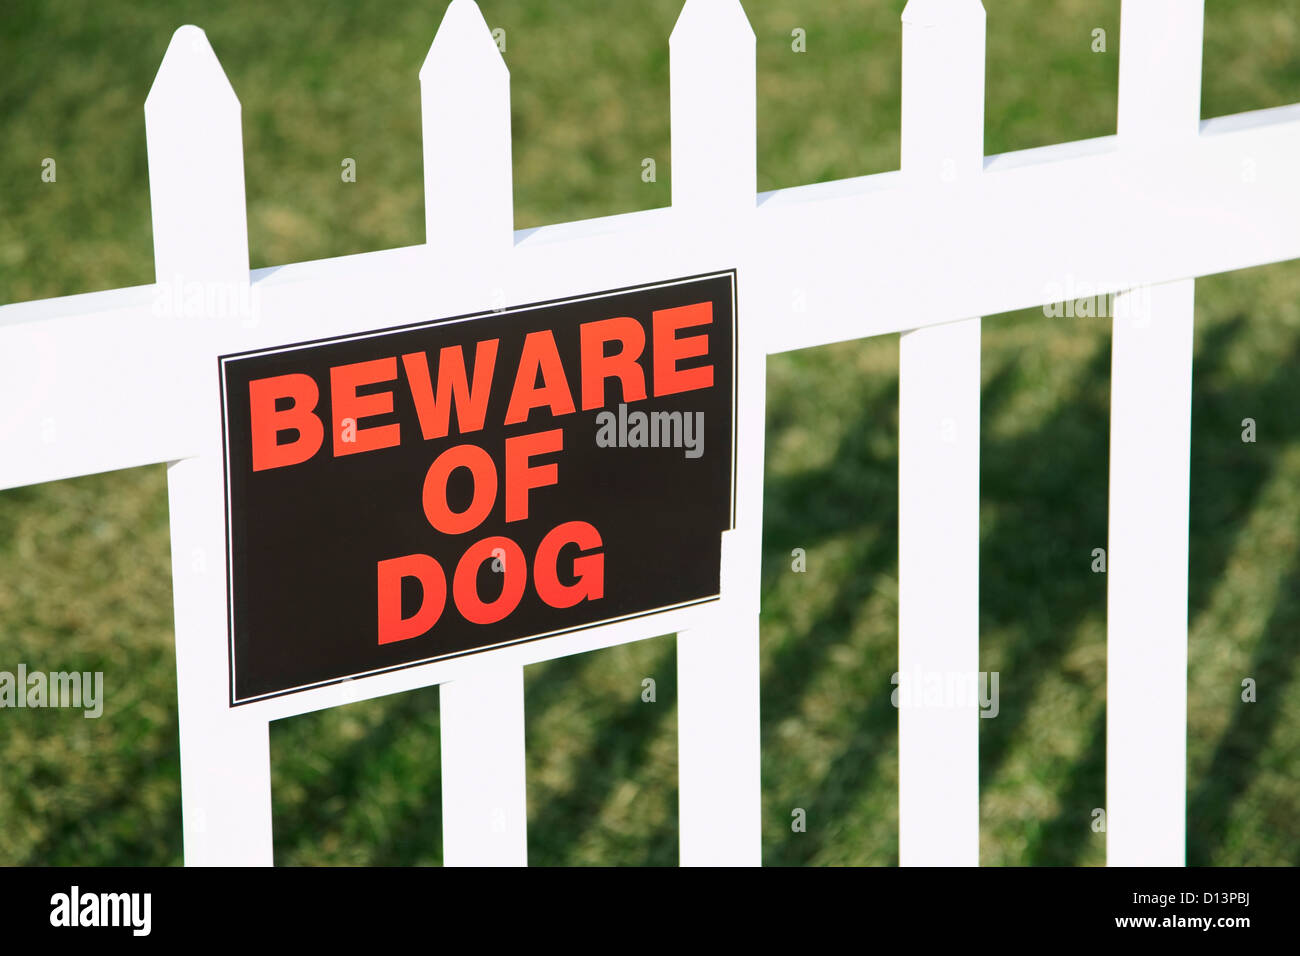 USA, Illinois, Metamora, Beware of dog sign on sign Stock Photo